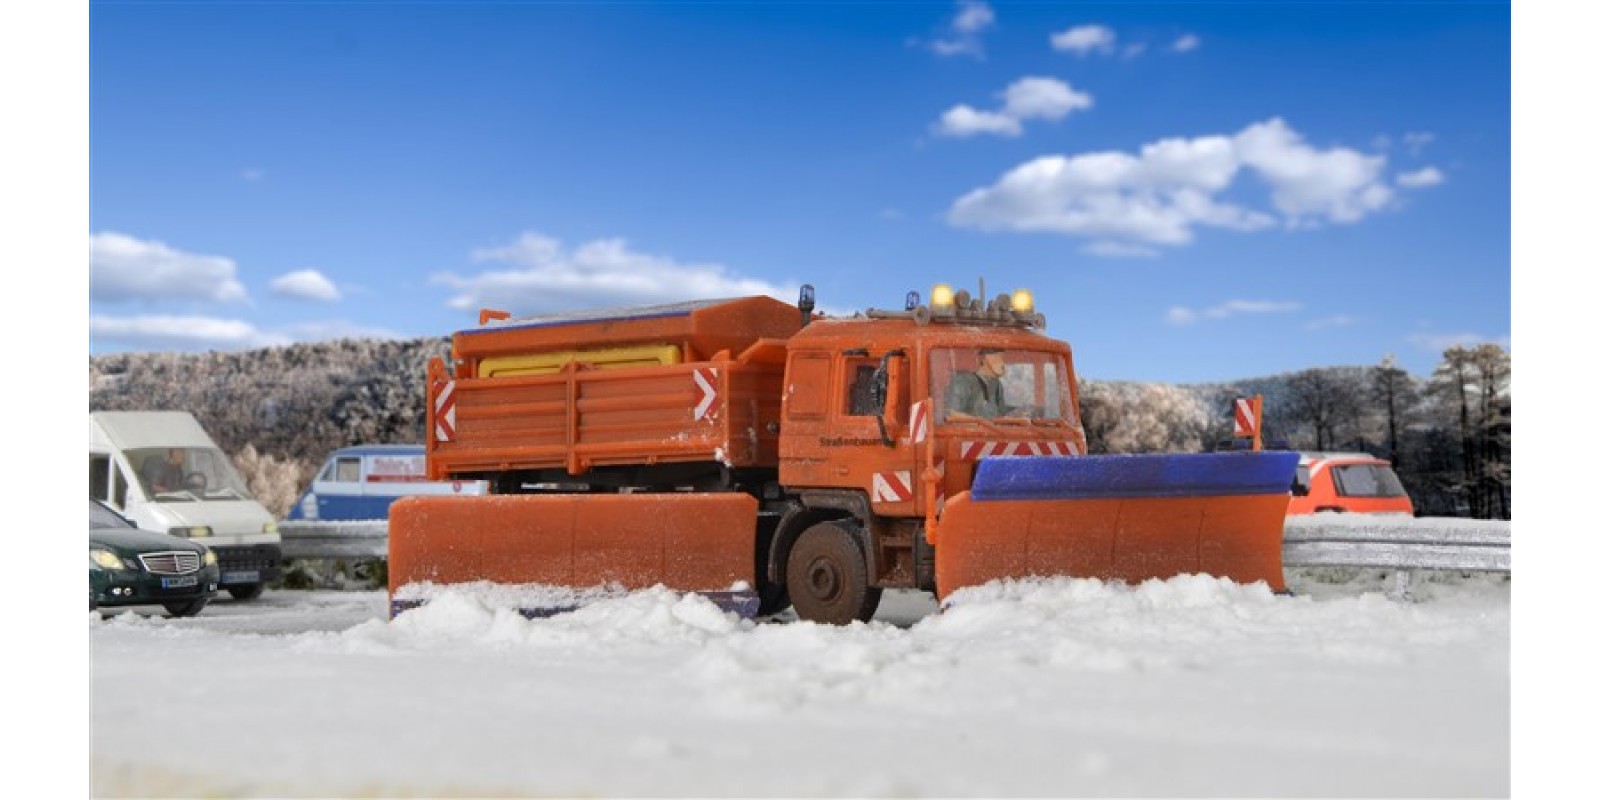 KI15219 H0 MAN motorway snowplough truck with side plough